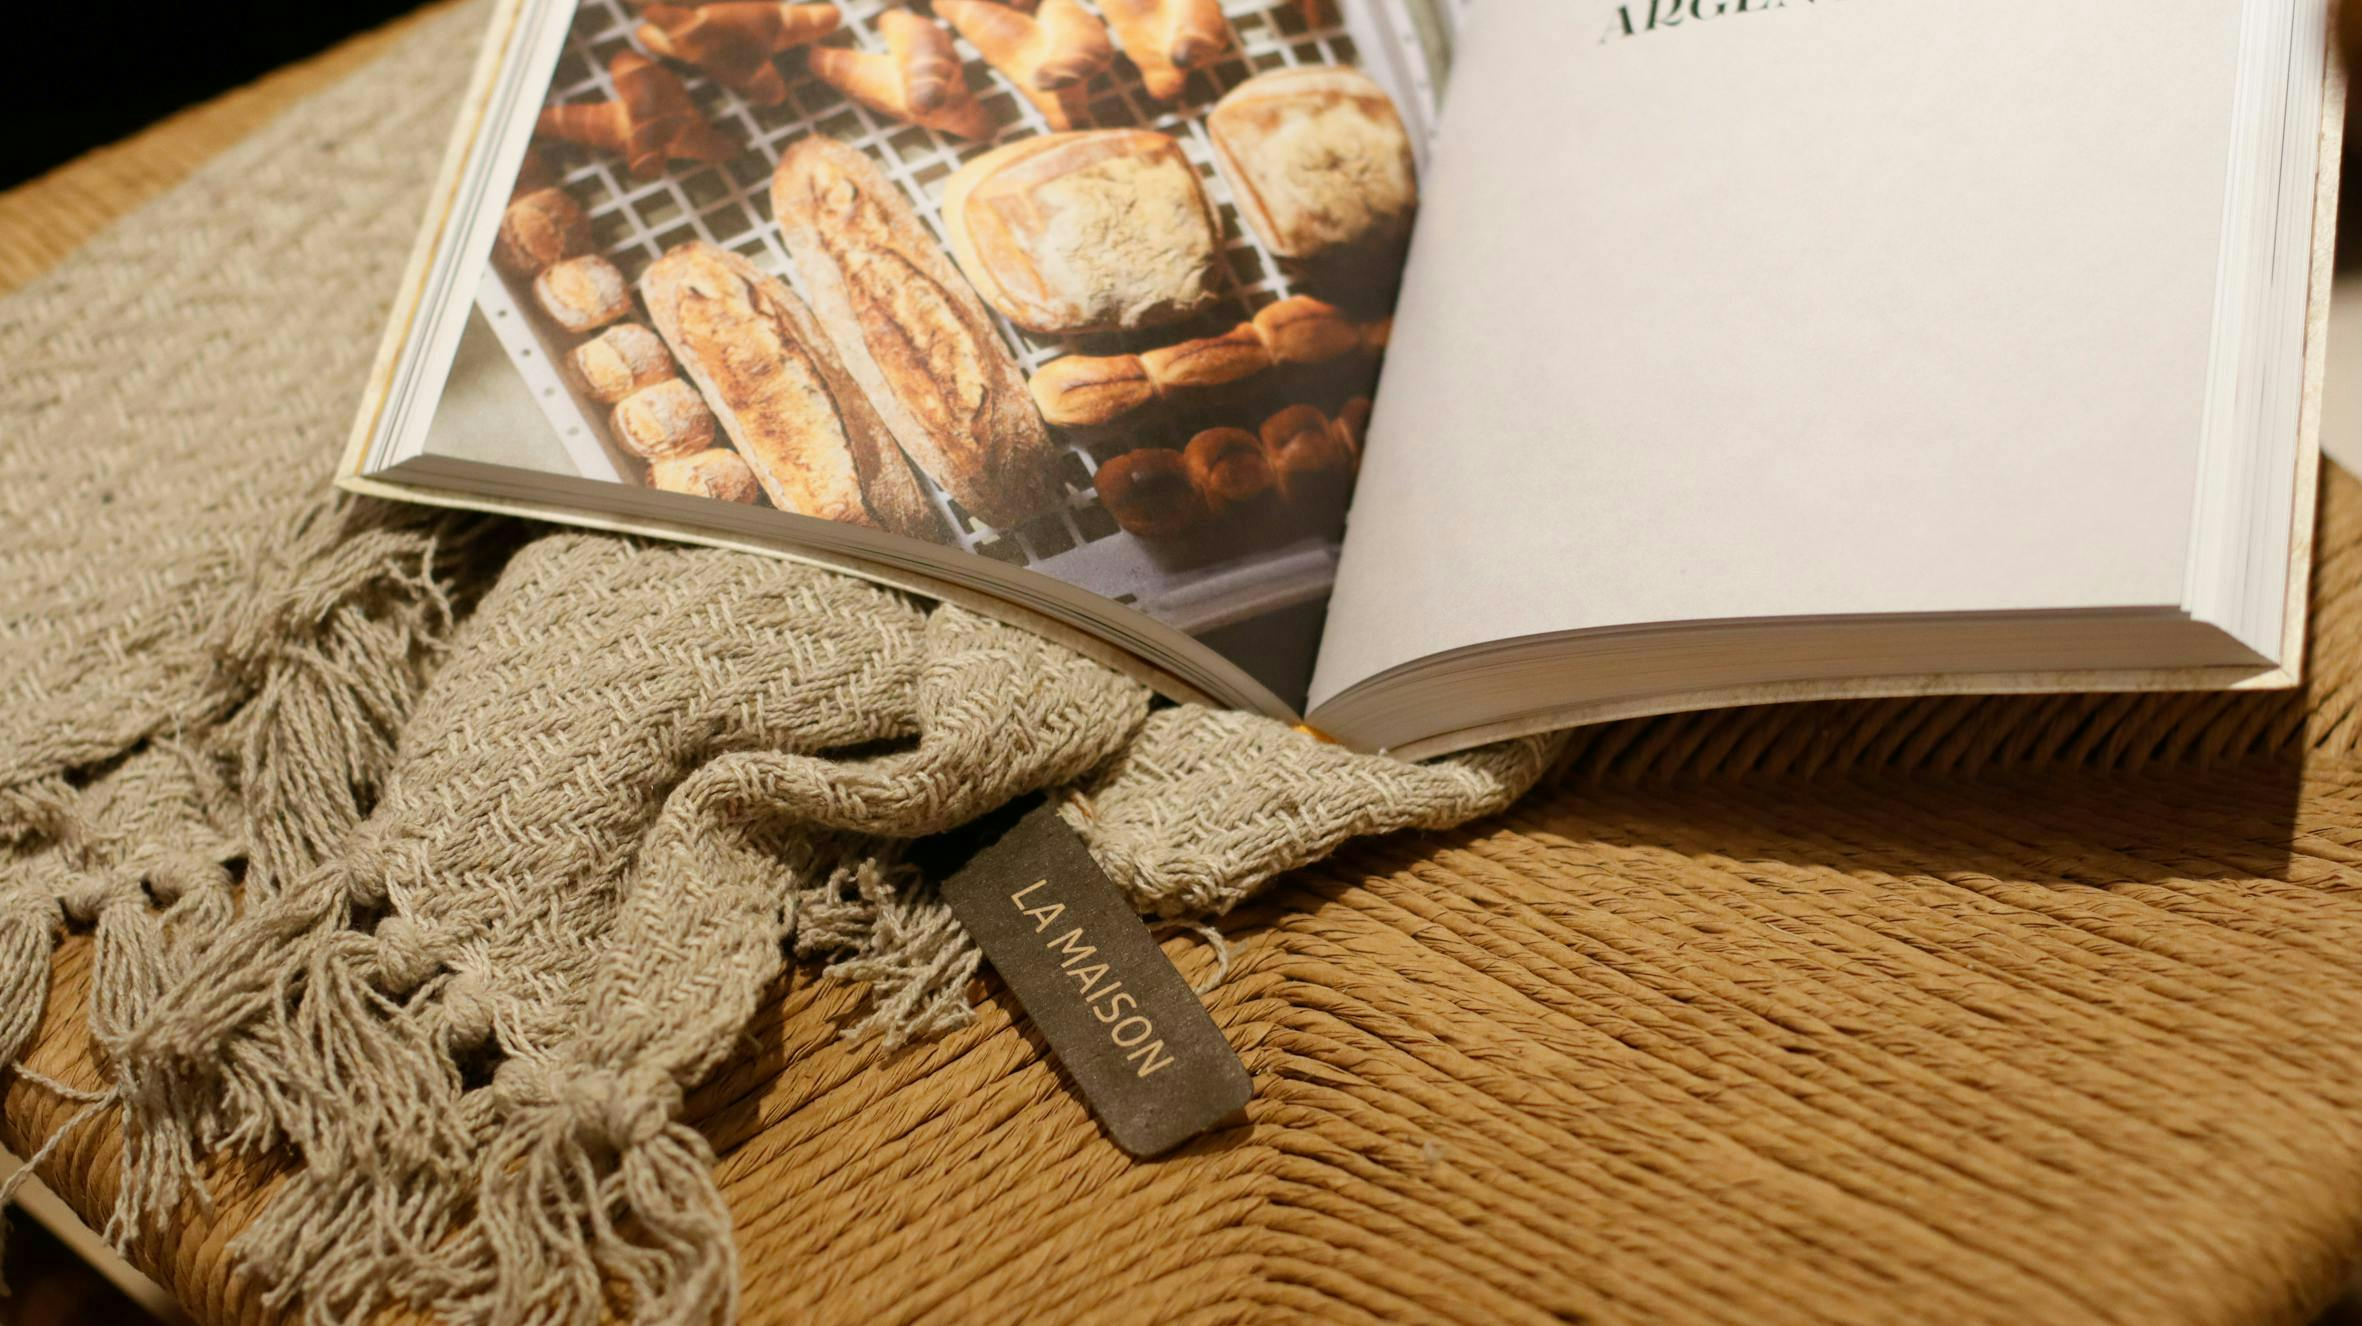 book publication bread food home decor